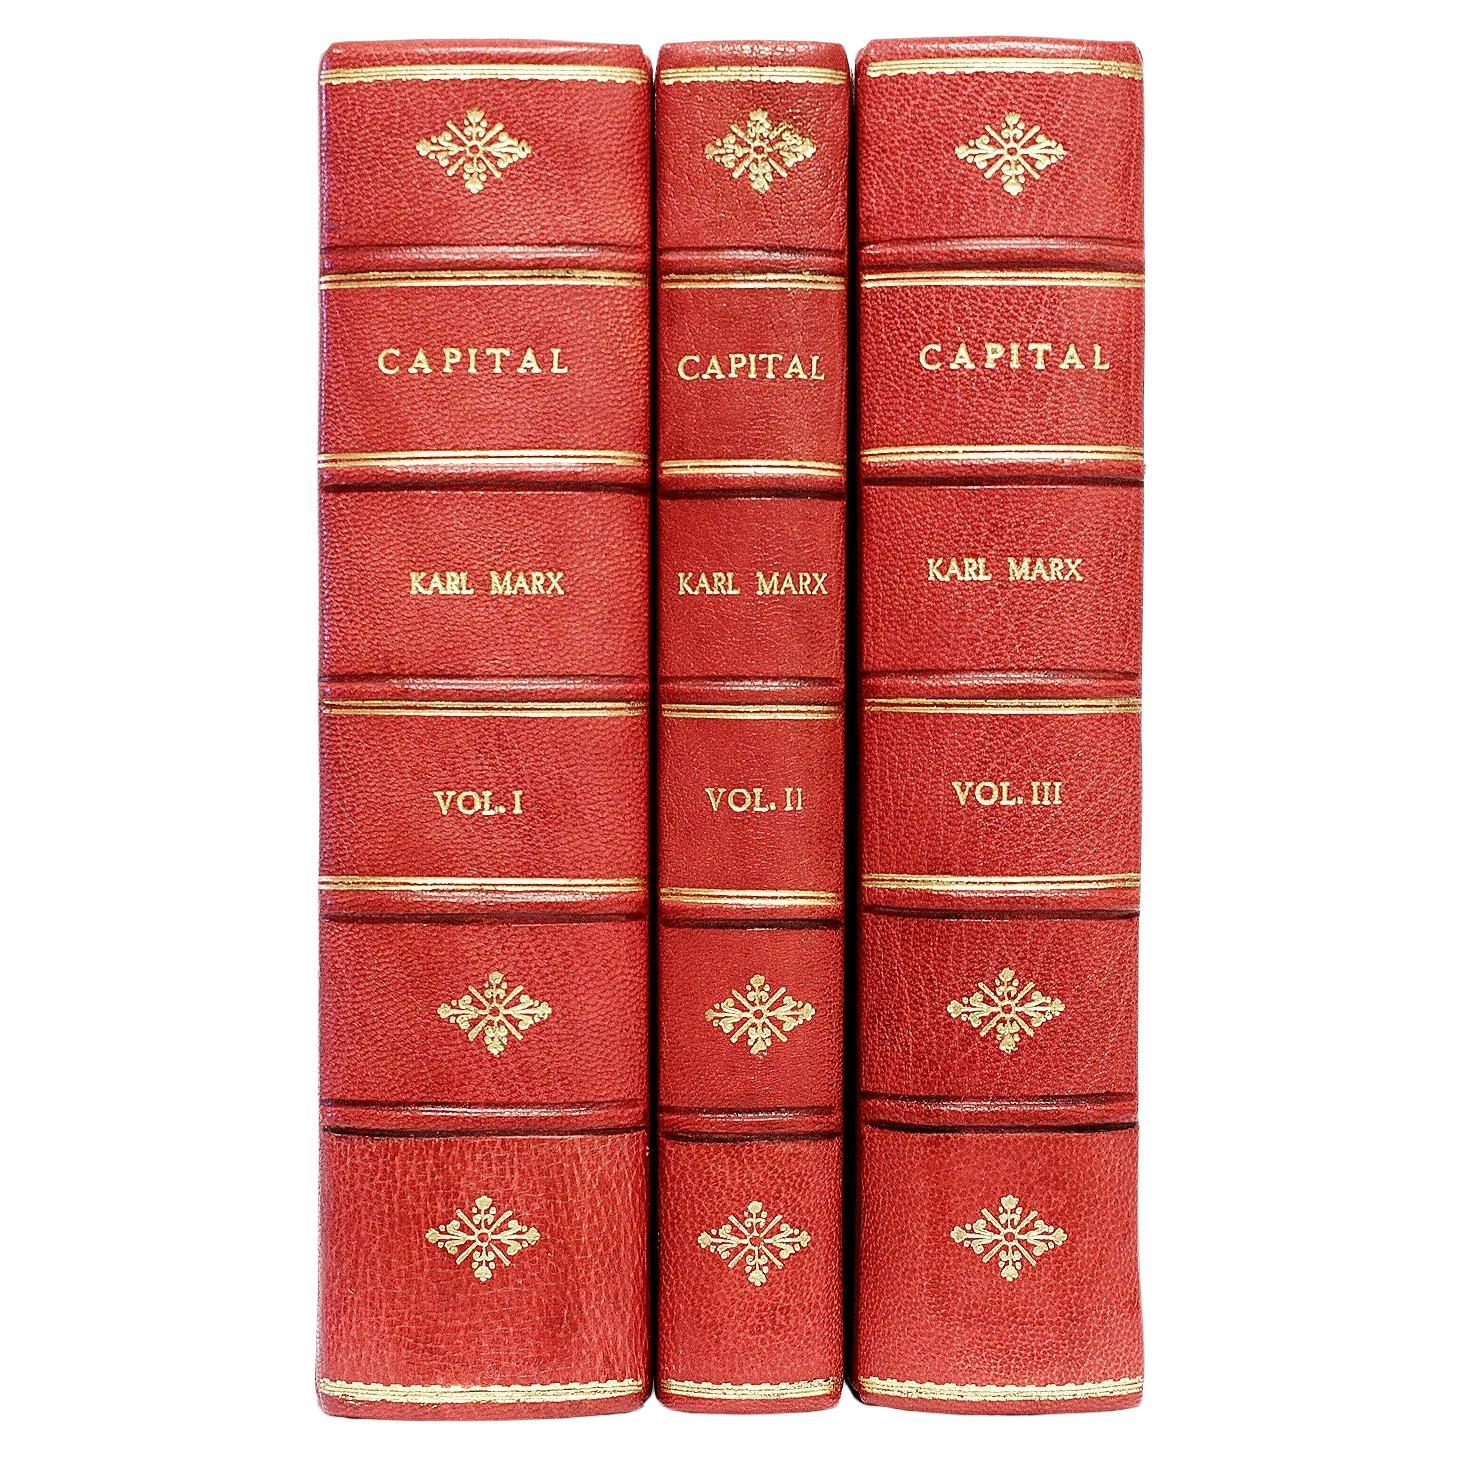 Karl MARX. Capital A Critique Of Political Economy. 1906, 1933, 1909 - 3 vols. For Sale